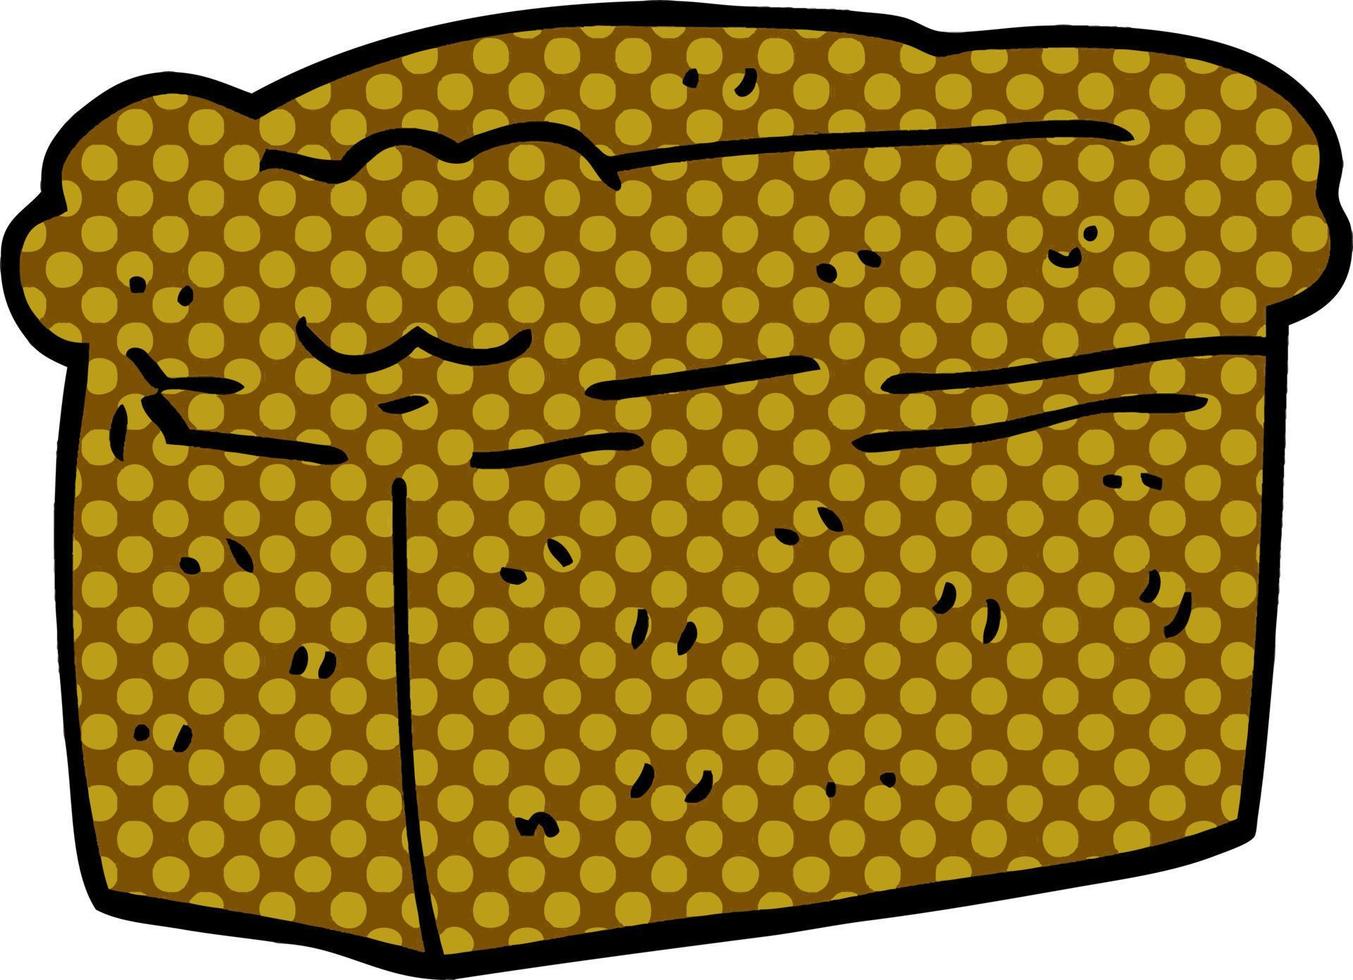 cartoon doodle loaf of bread vector